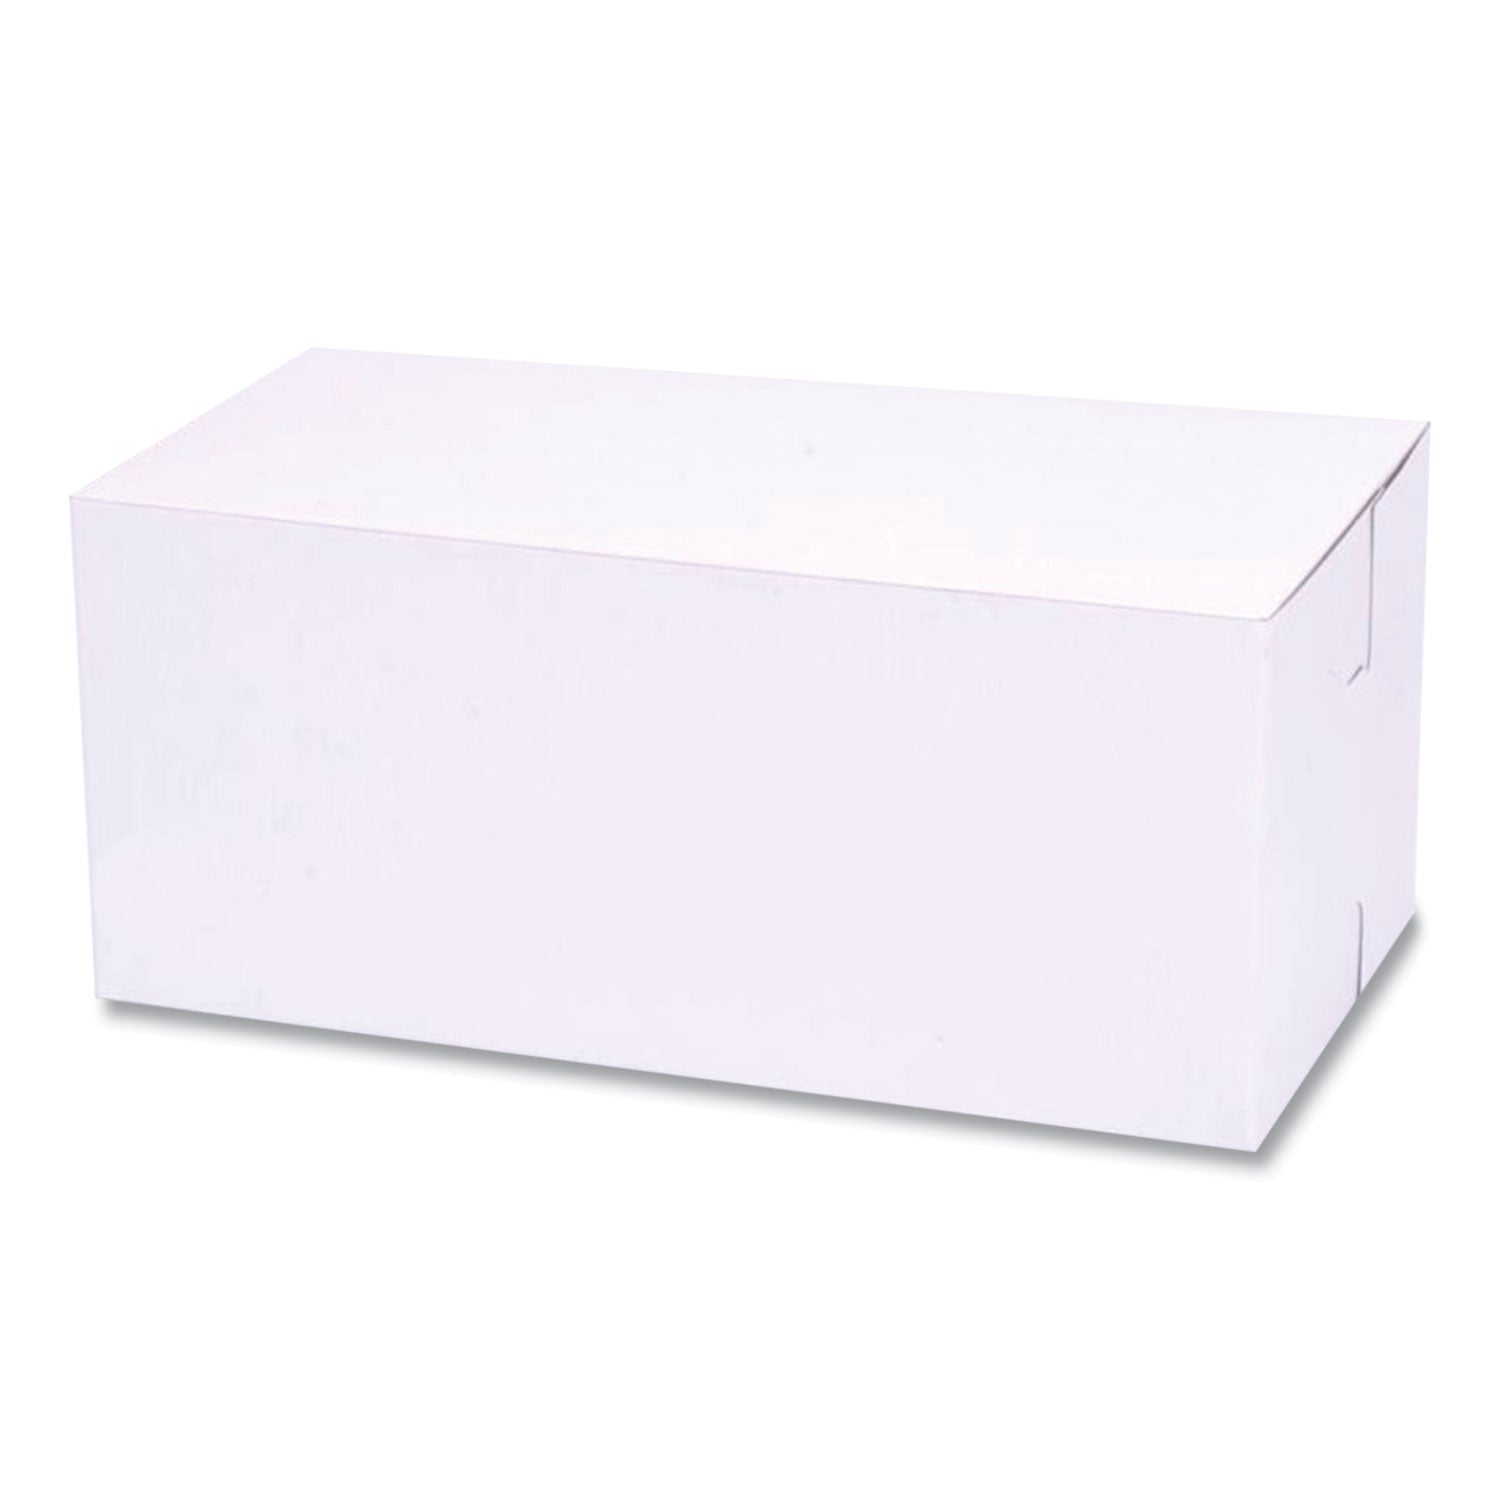 white-one-piece-non-window-bakery-boxes-standard-9-x-5-x-4-white-paper-250-bundle_sch1549 - 1